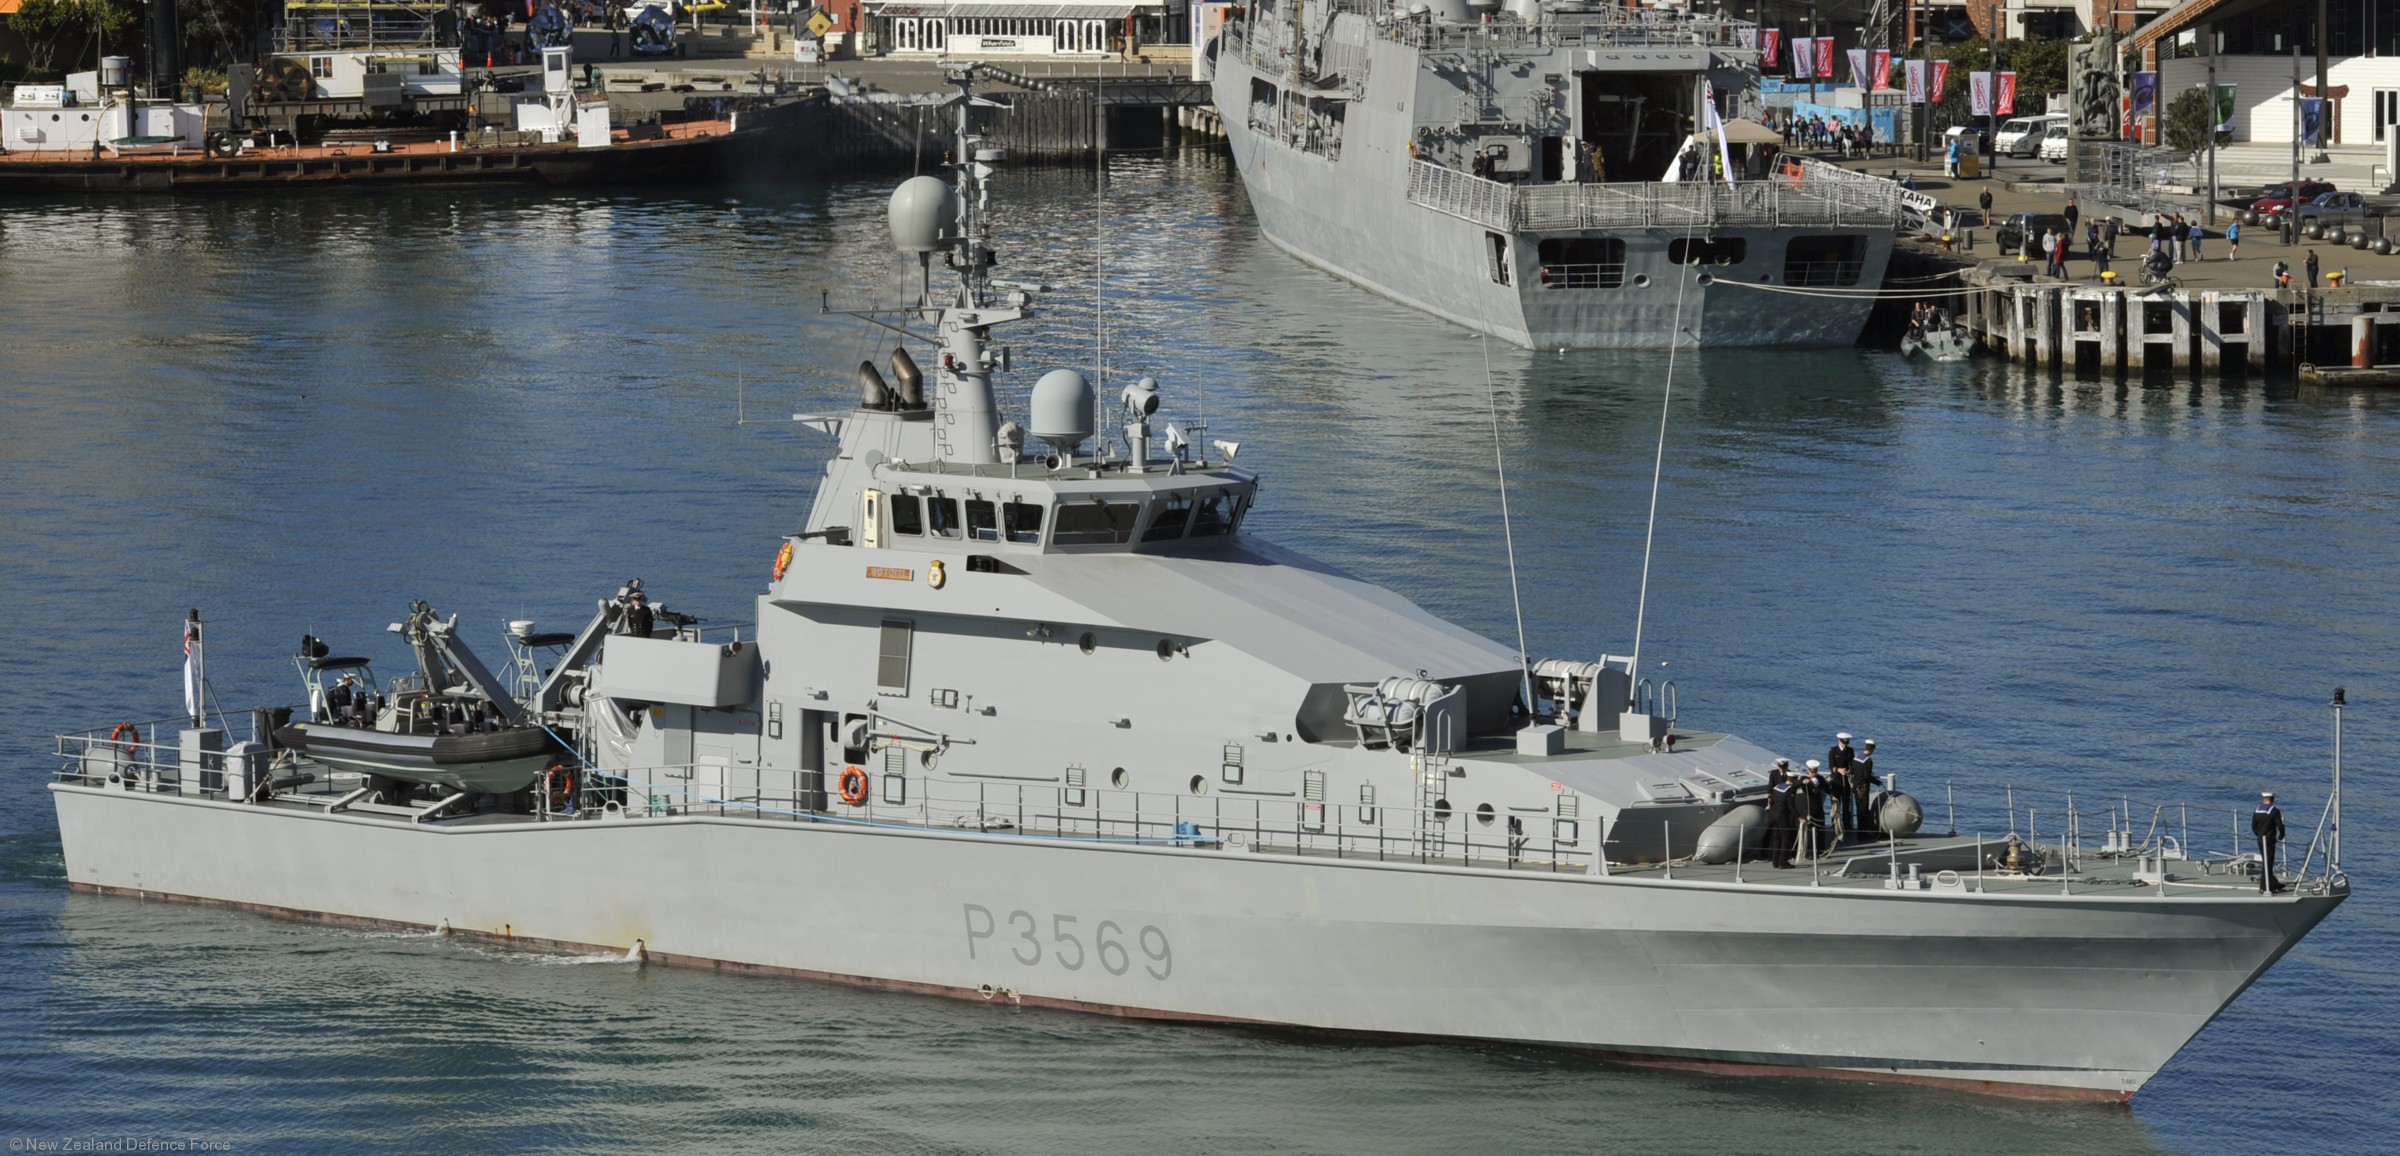 p-3569 hmnzs rotoiti protector class inshore patrol vessel royal new zealand navy 02